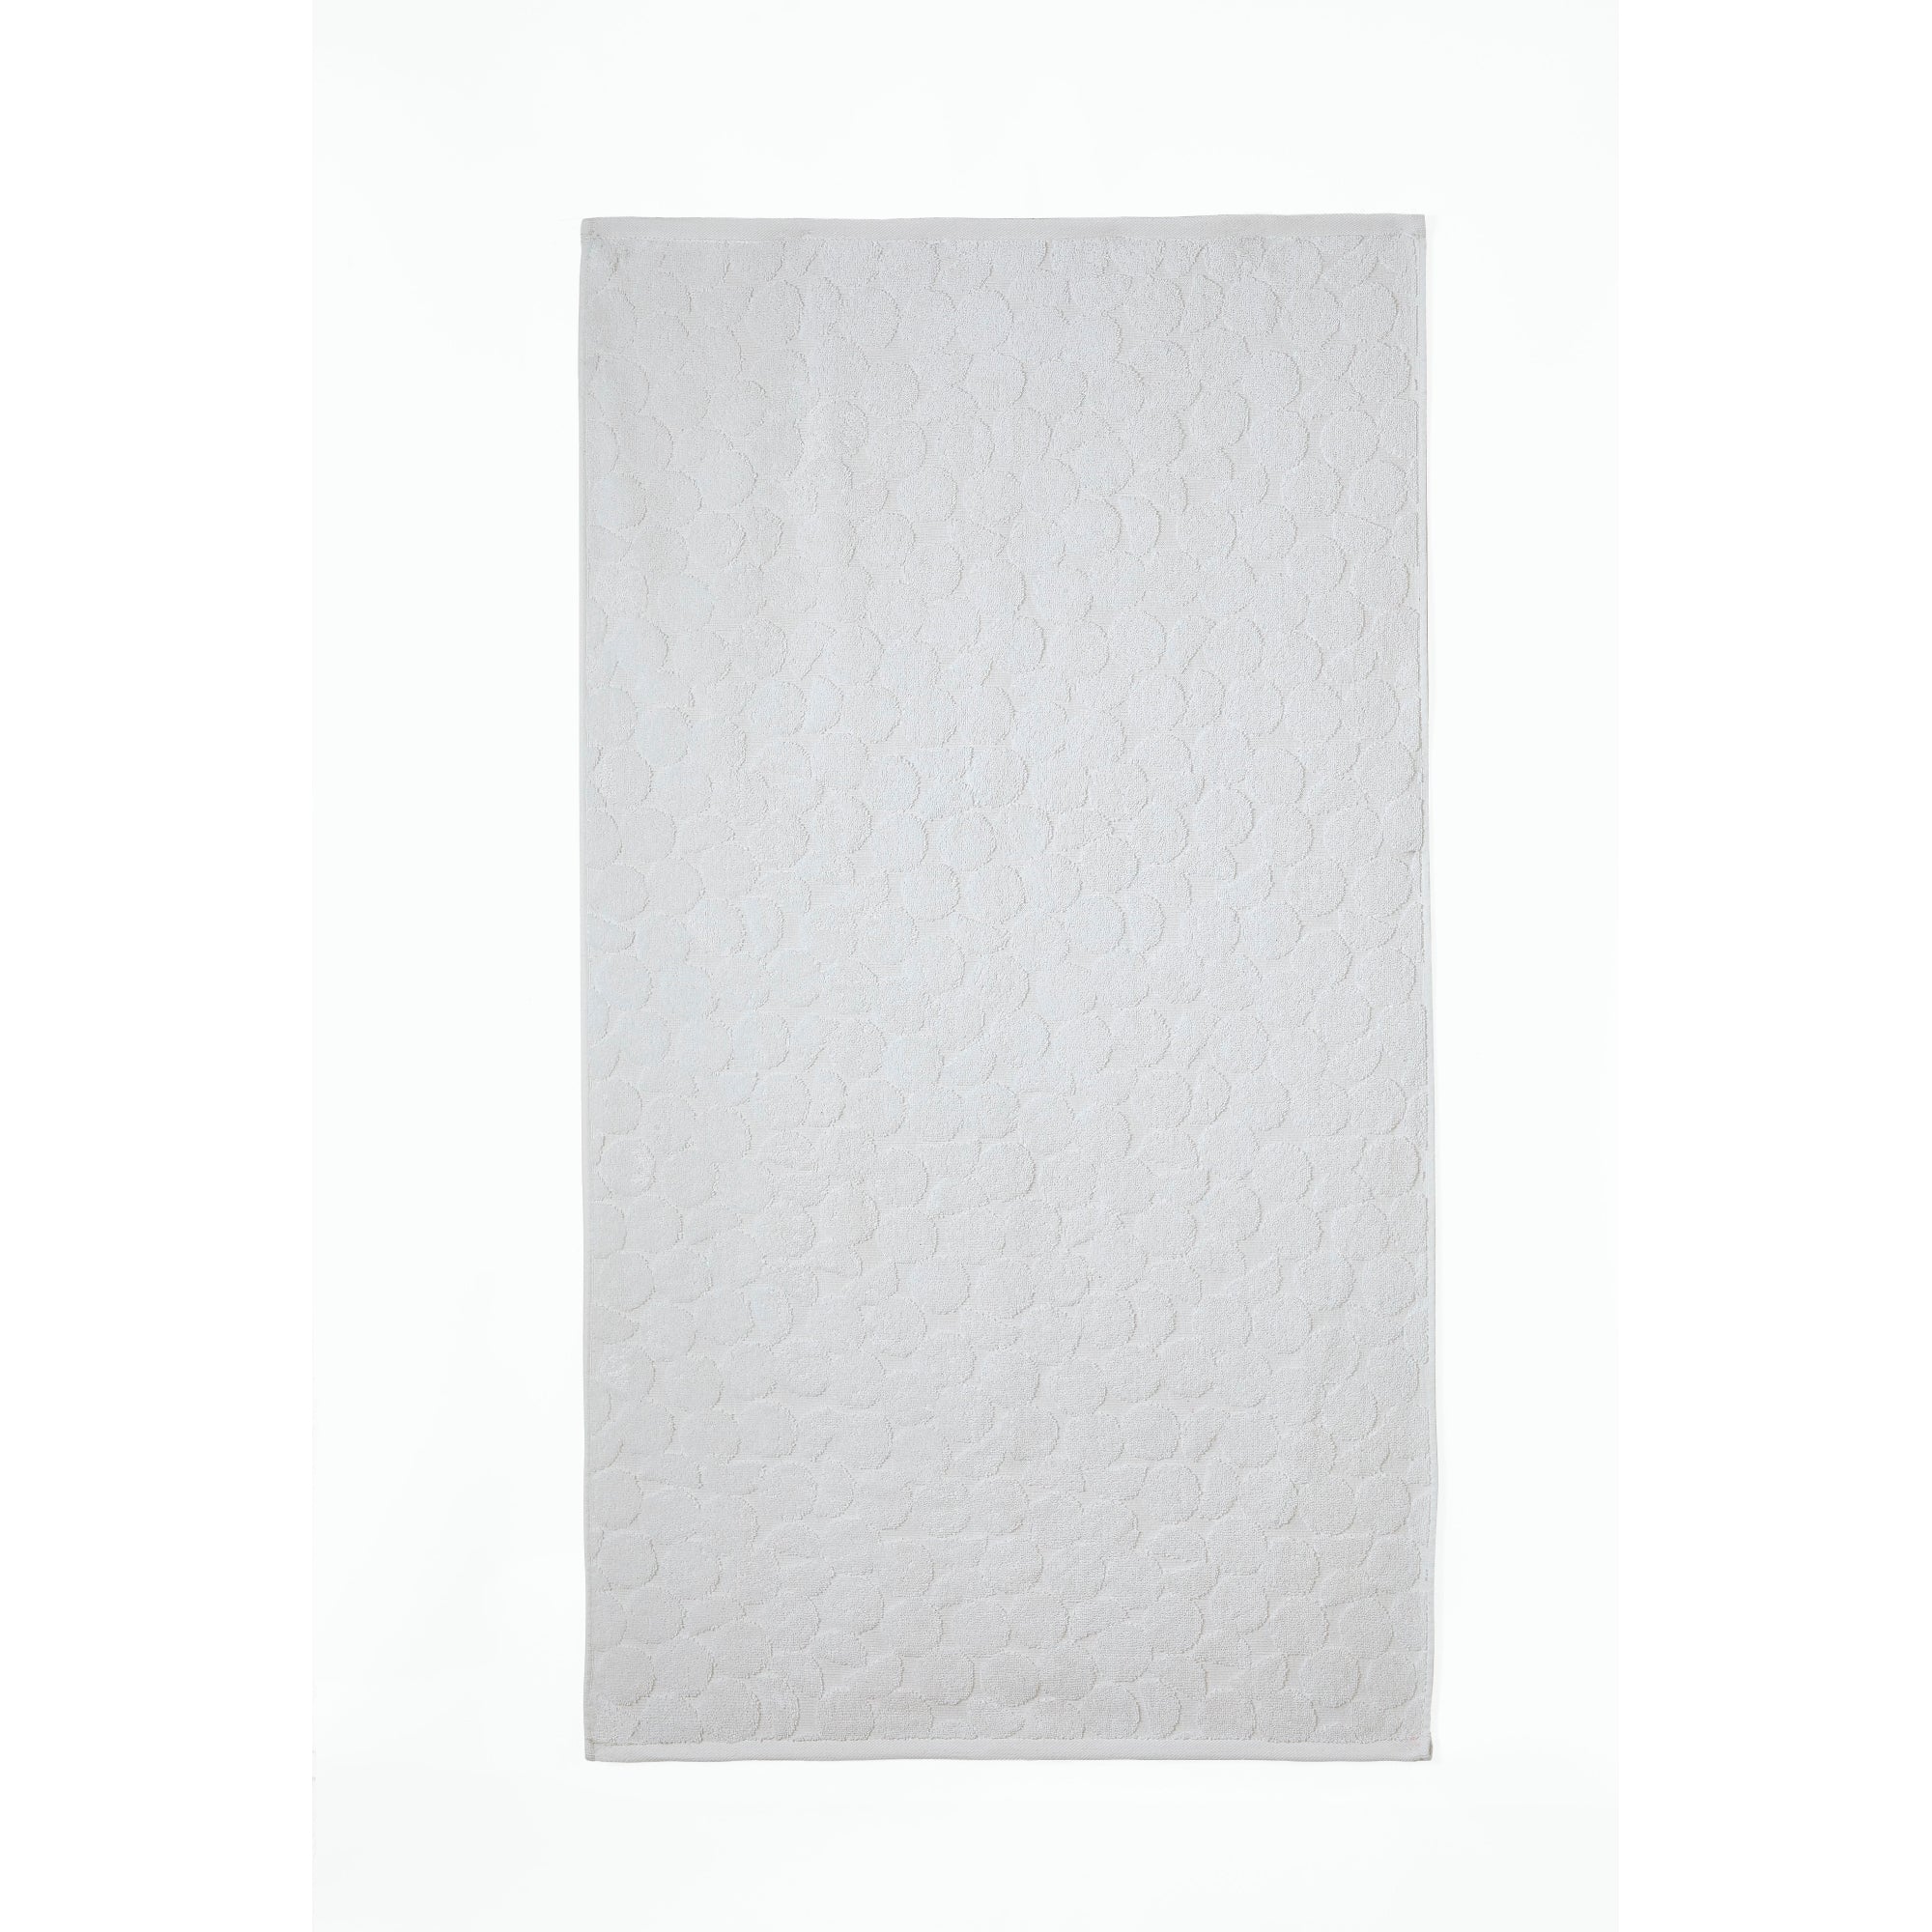 Bath Sheet Ingo by Fusion in White